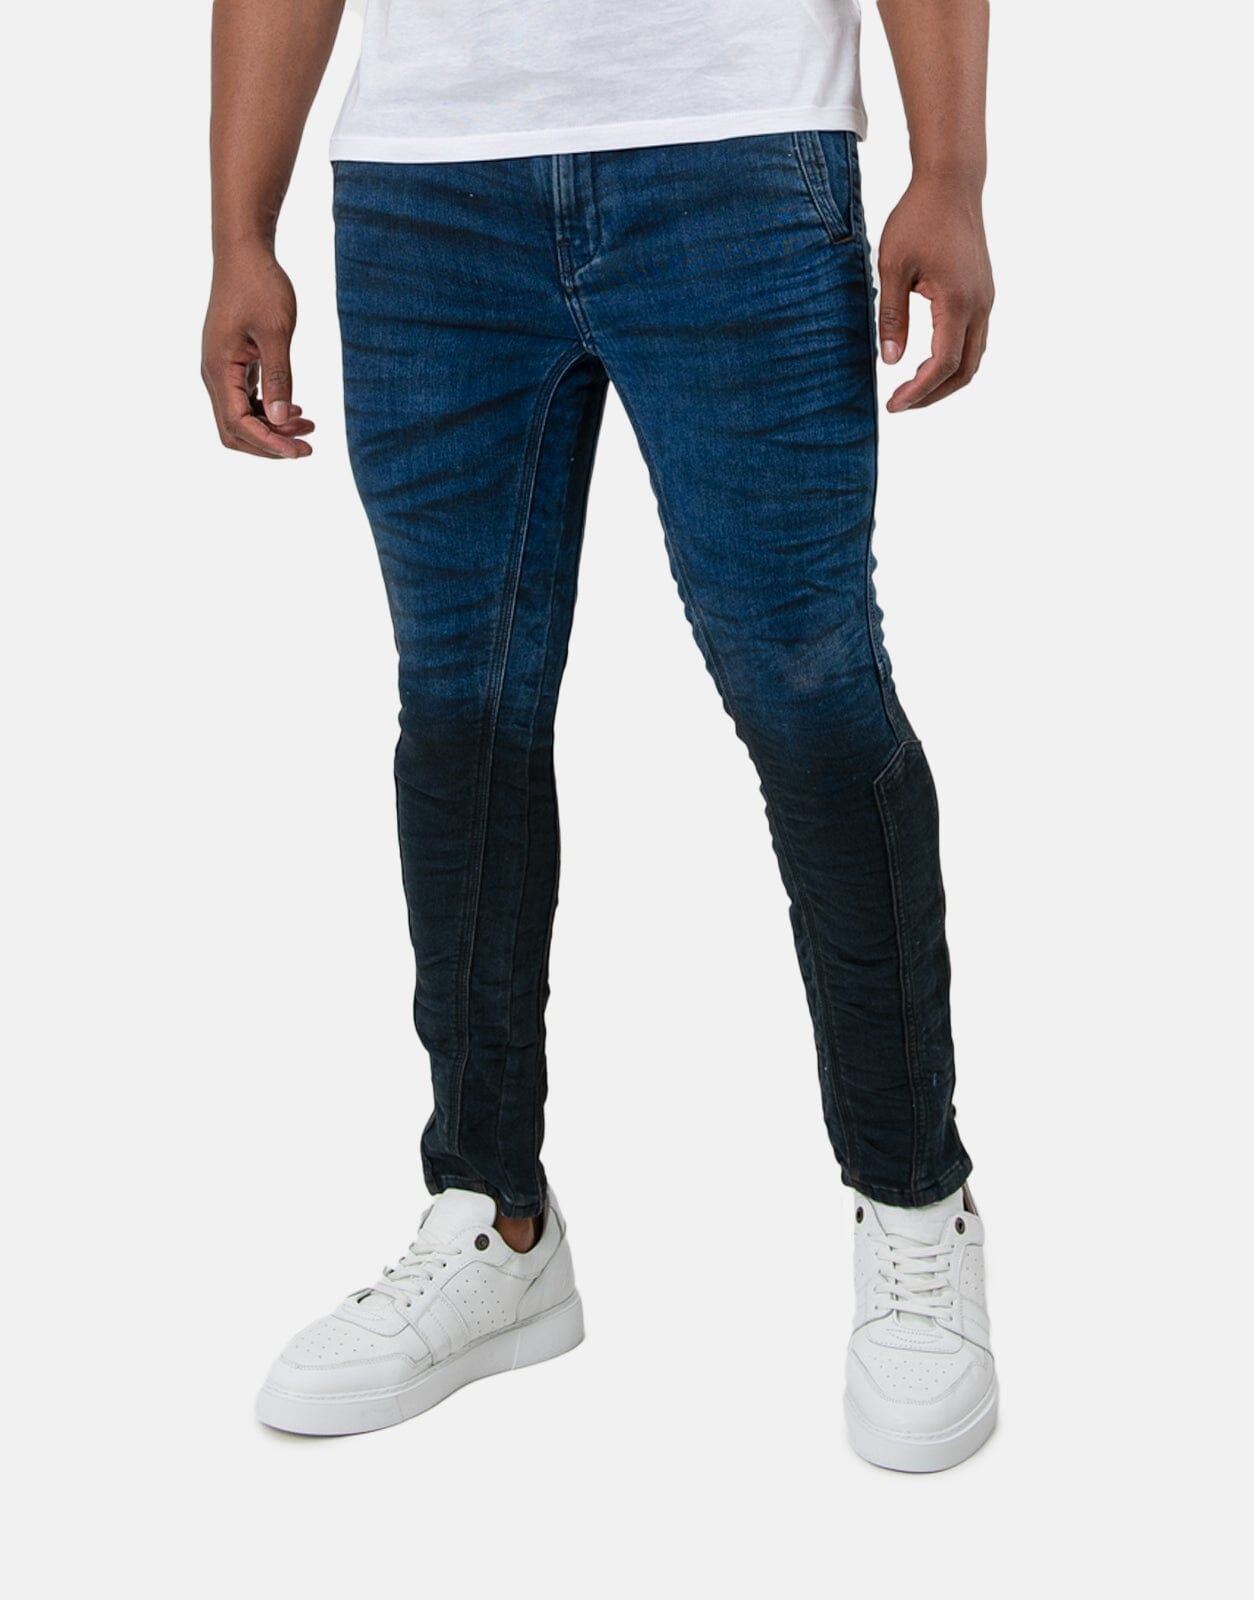 Vialli Morbido Cavaneria Jeans - Subwear